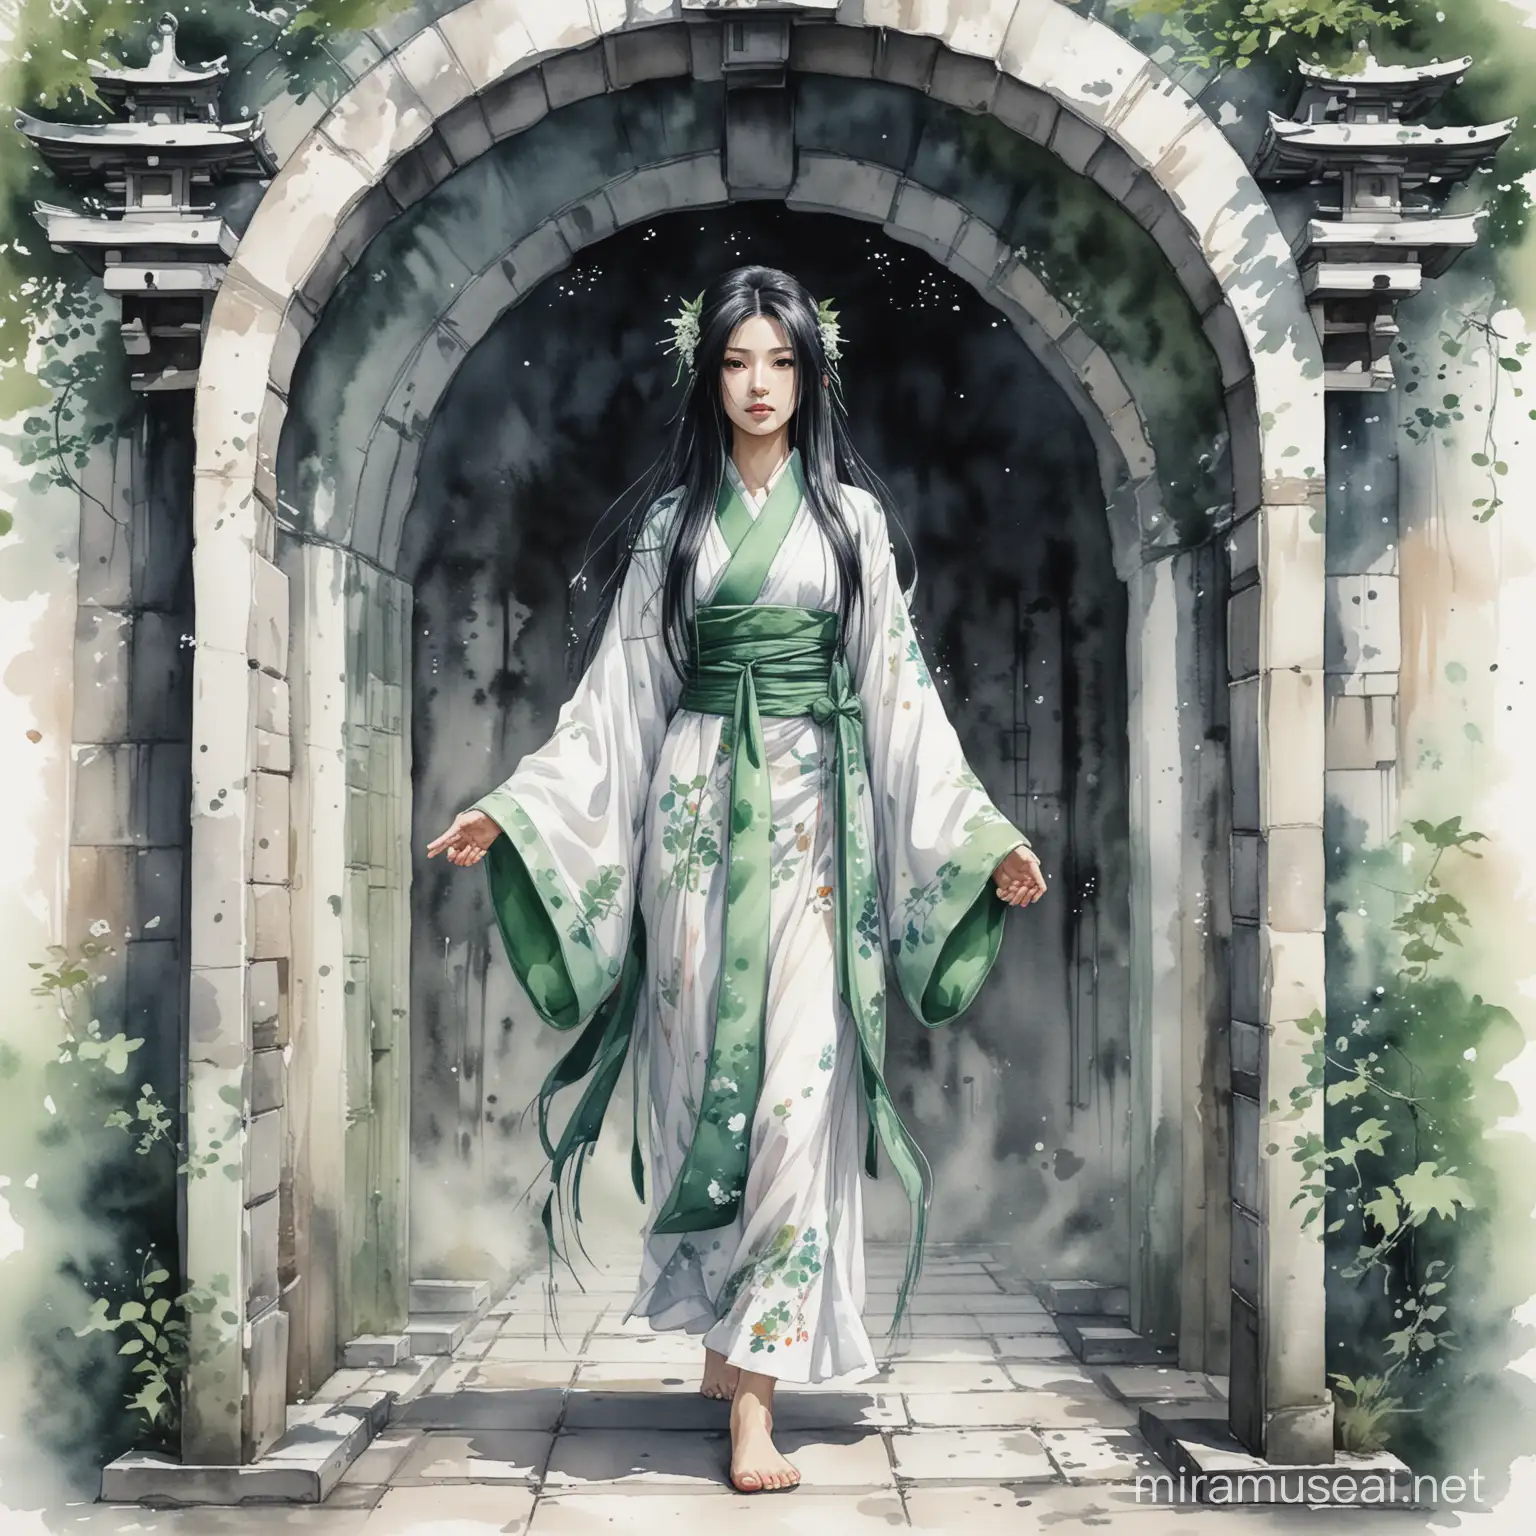 Japanese Shrine Maiden Entering Enchanted Portal